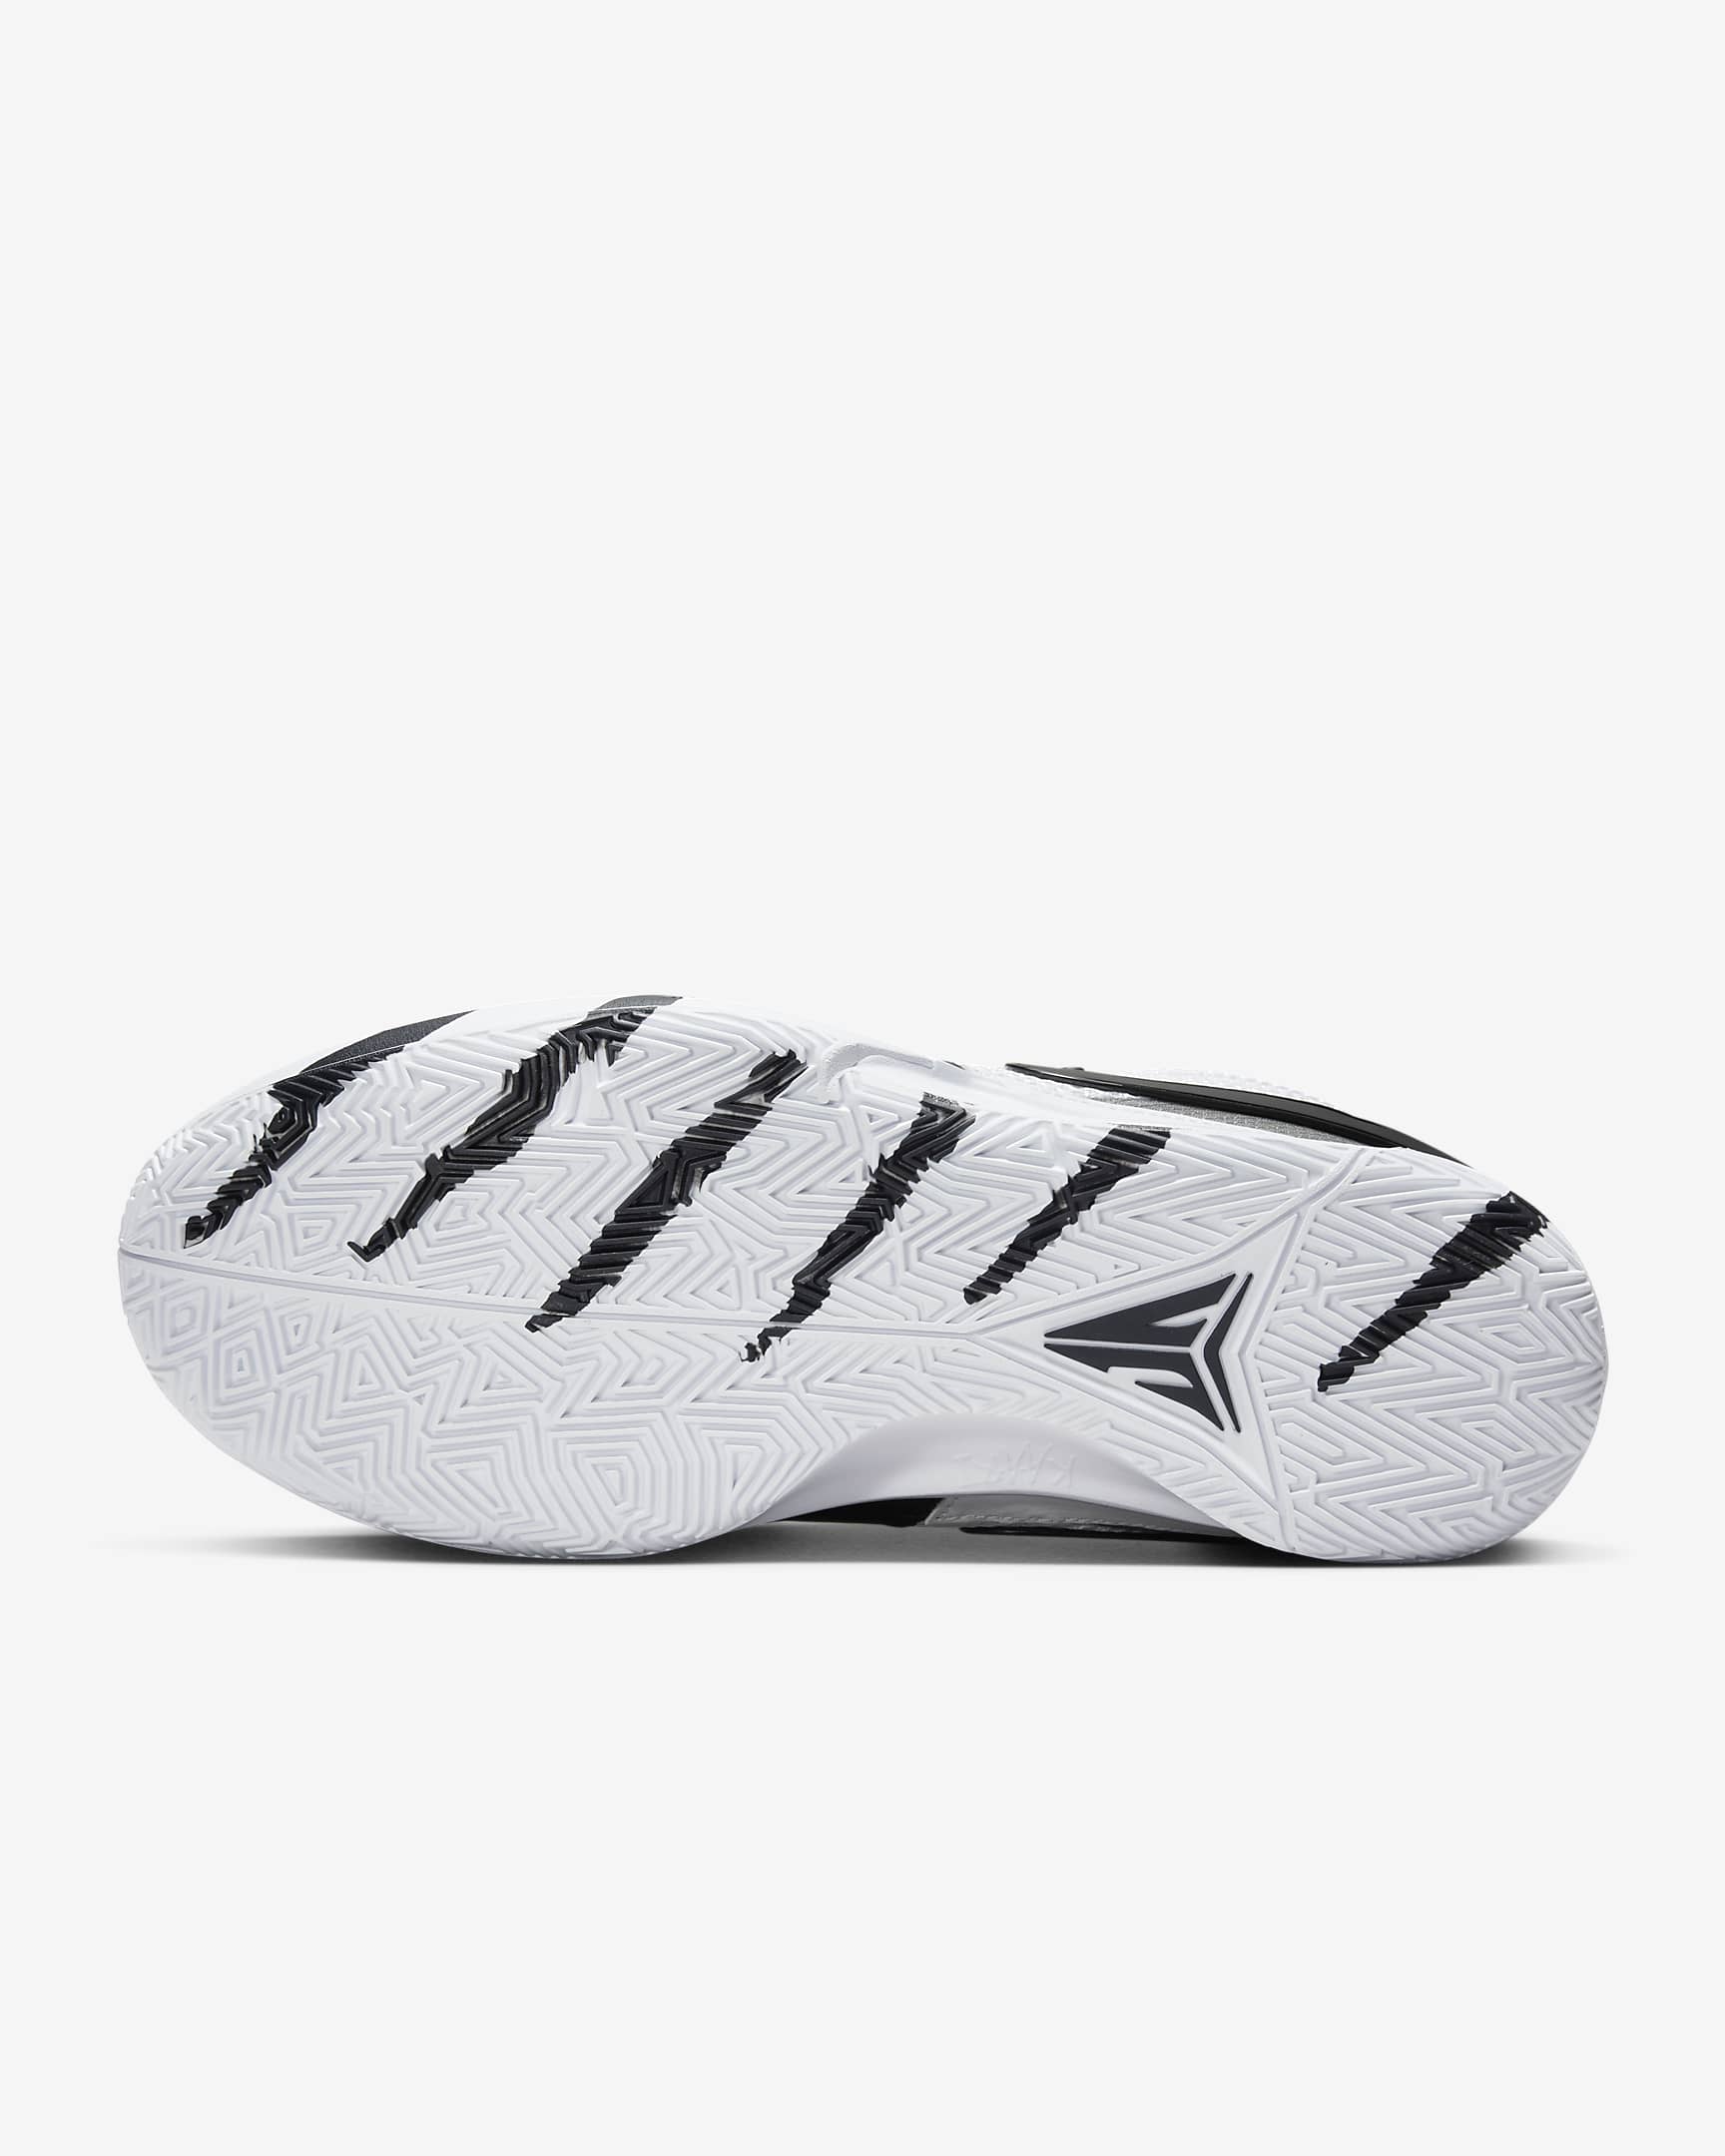 JA 1 'White/Black' Basketball Shoes. Nike IE